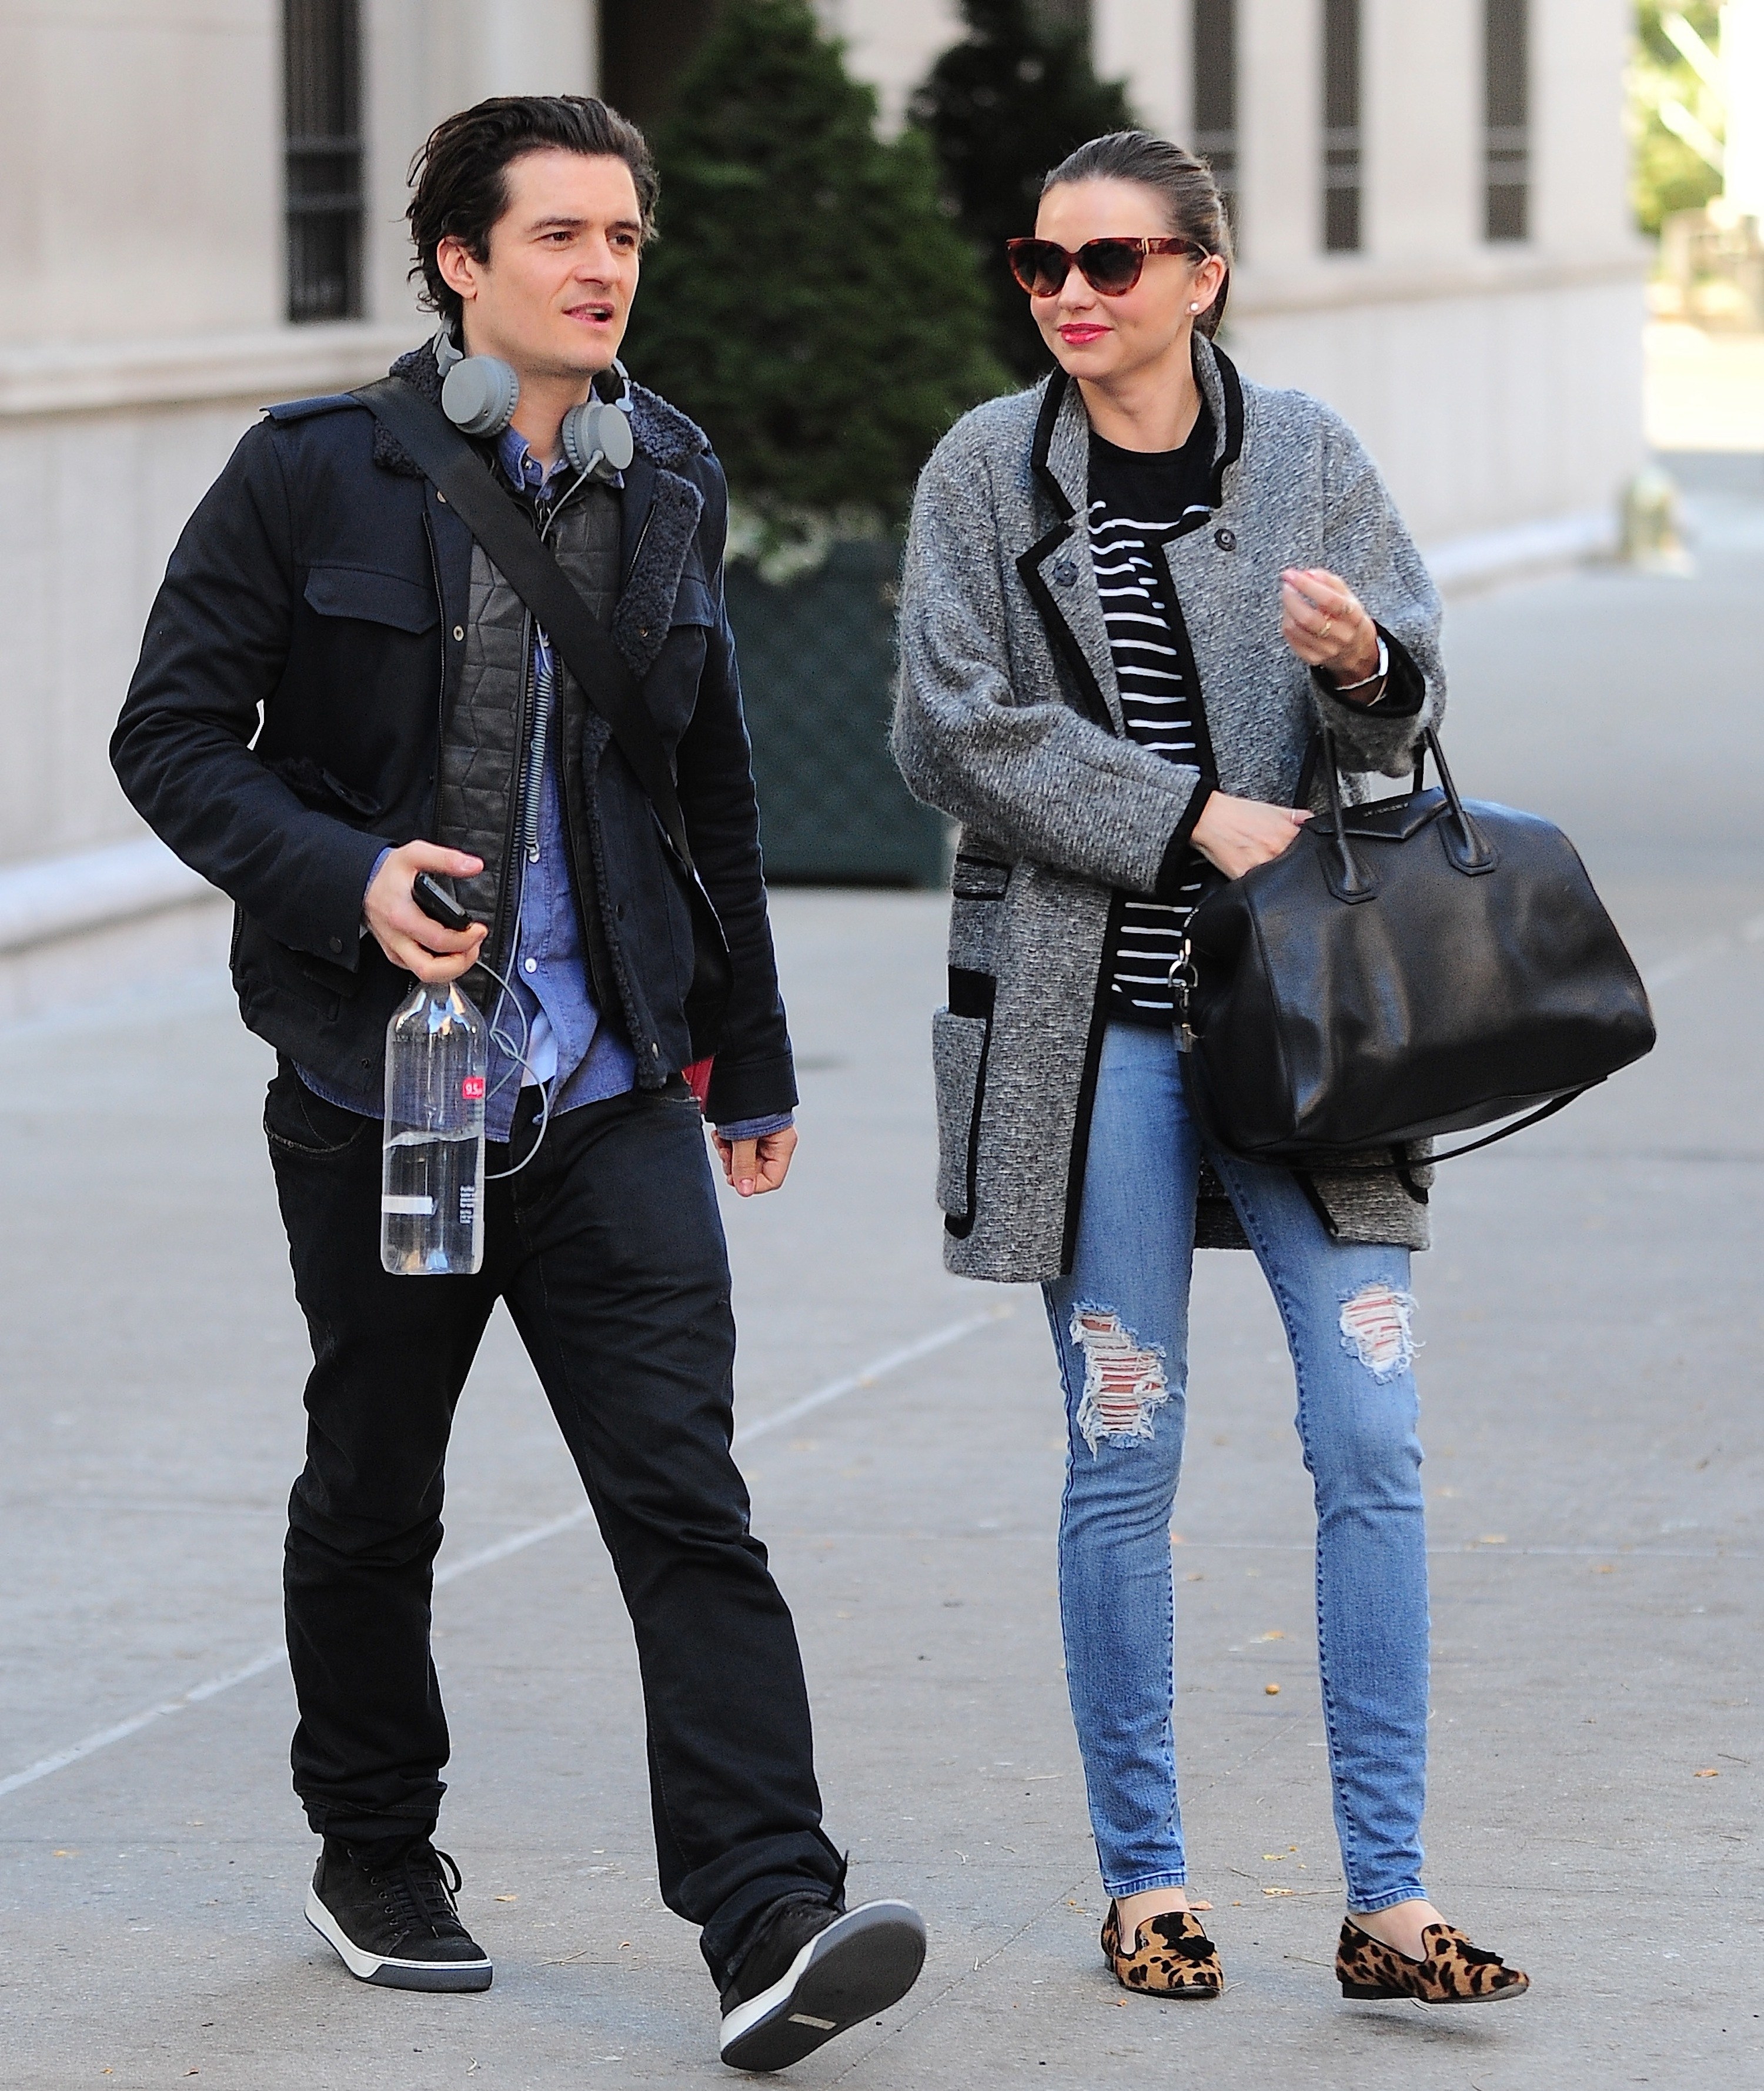 Orlando Bloom and Miranda Kerr are seen on December 13, 2013 in New York City